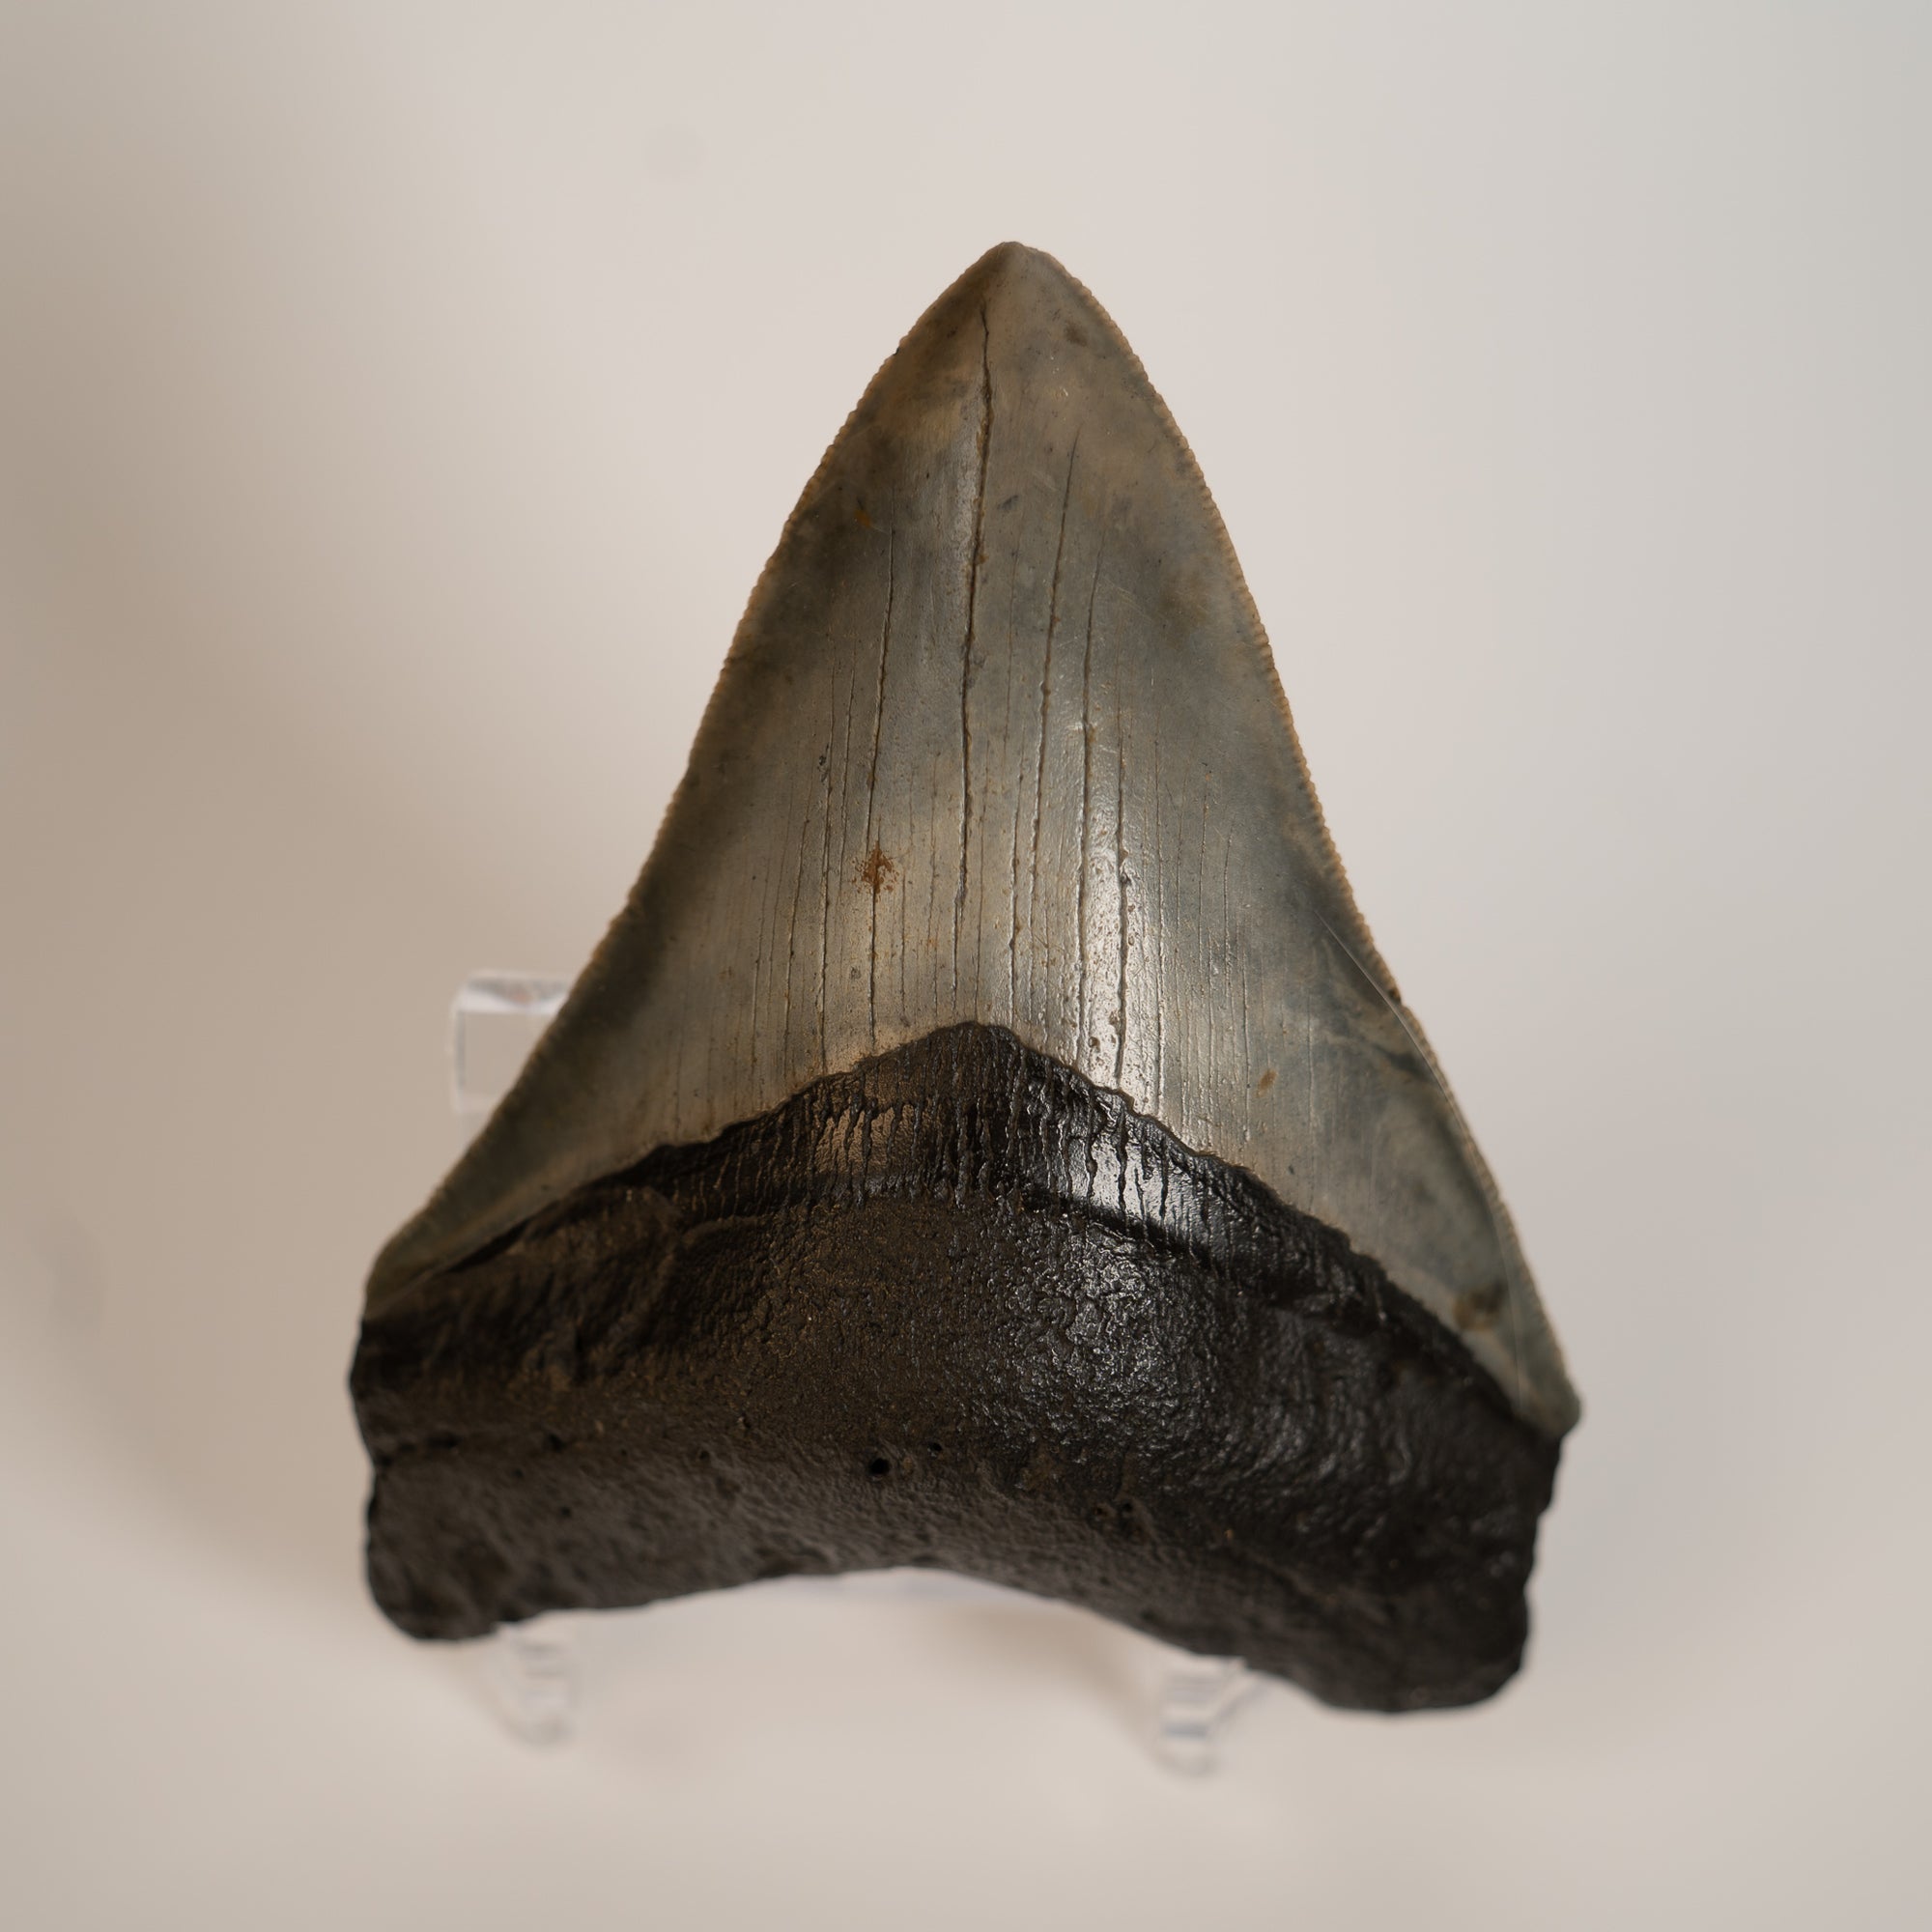 Large Megalodon Tooth, 3.5" long - Miocene Epoch - 23 to 3.6 MYA - Southeastern U.S.